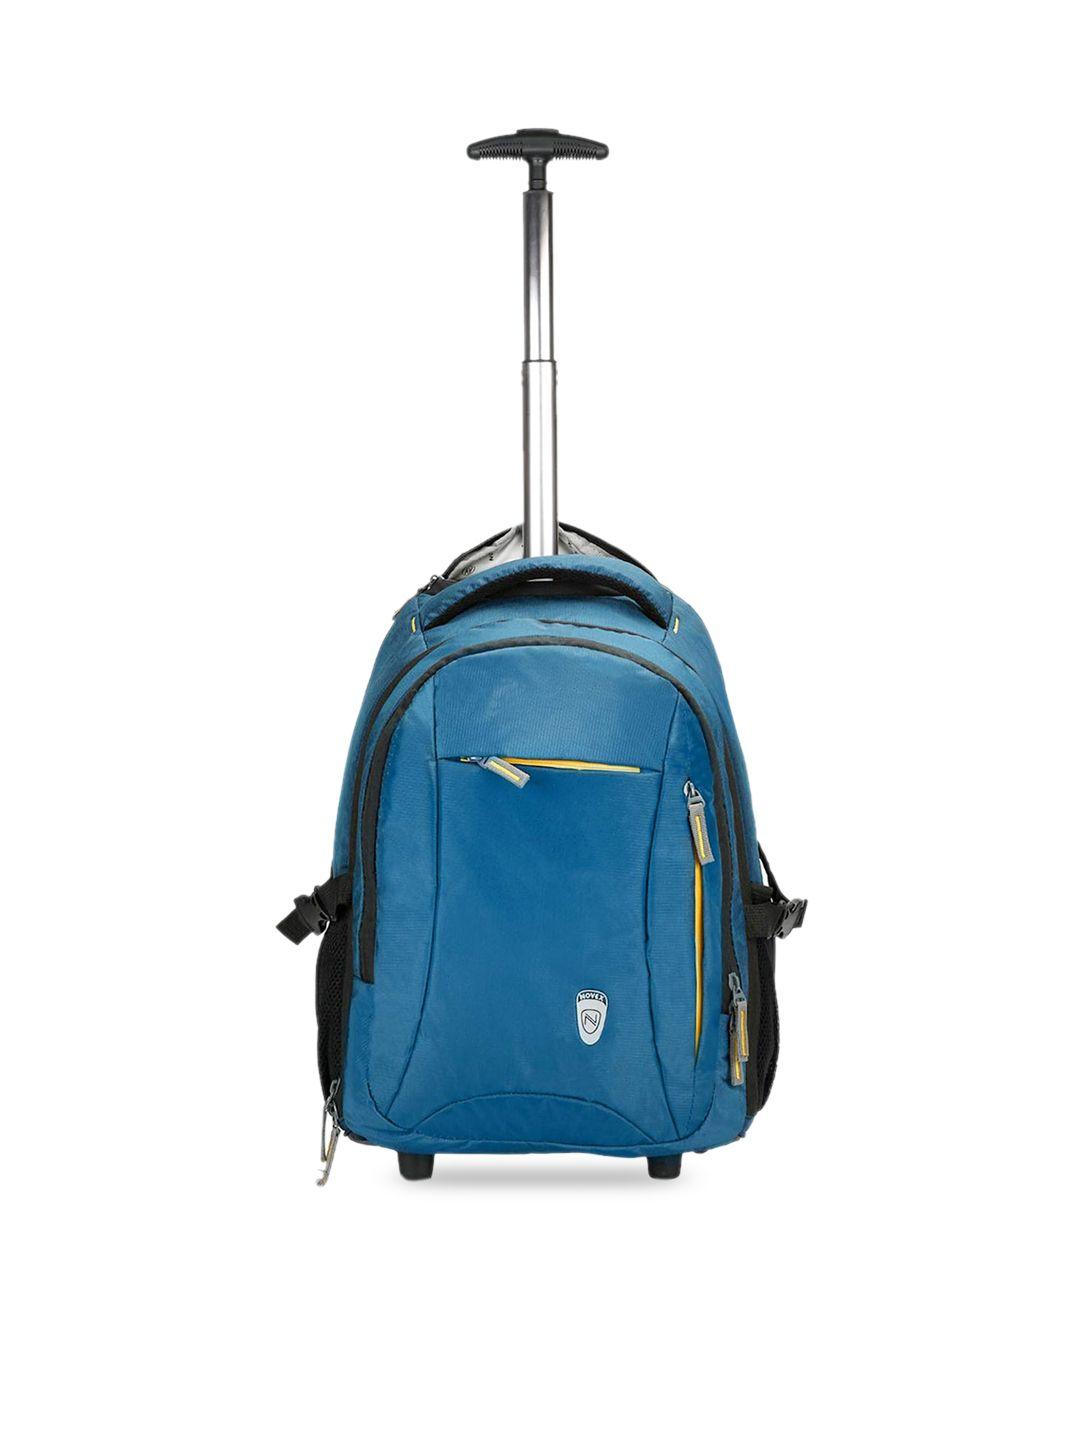 novex unisex teal green & black solid 15.6 inch trolley laptop backpack